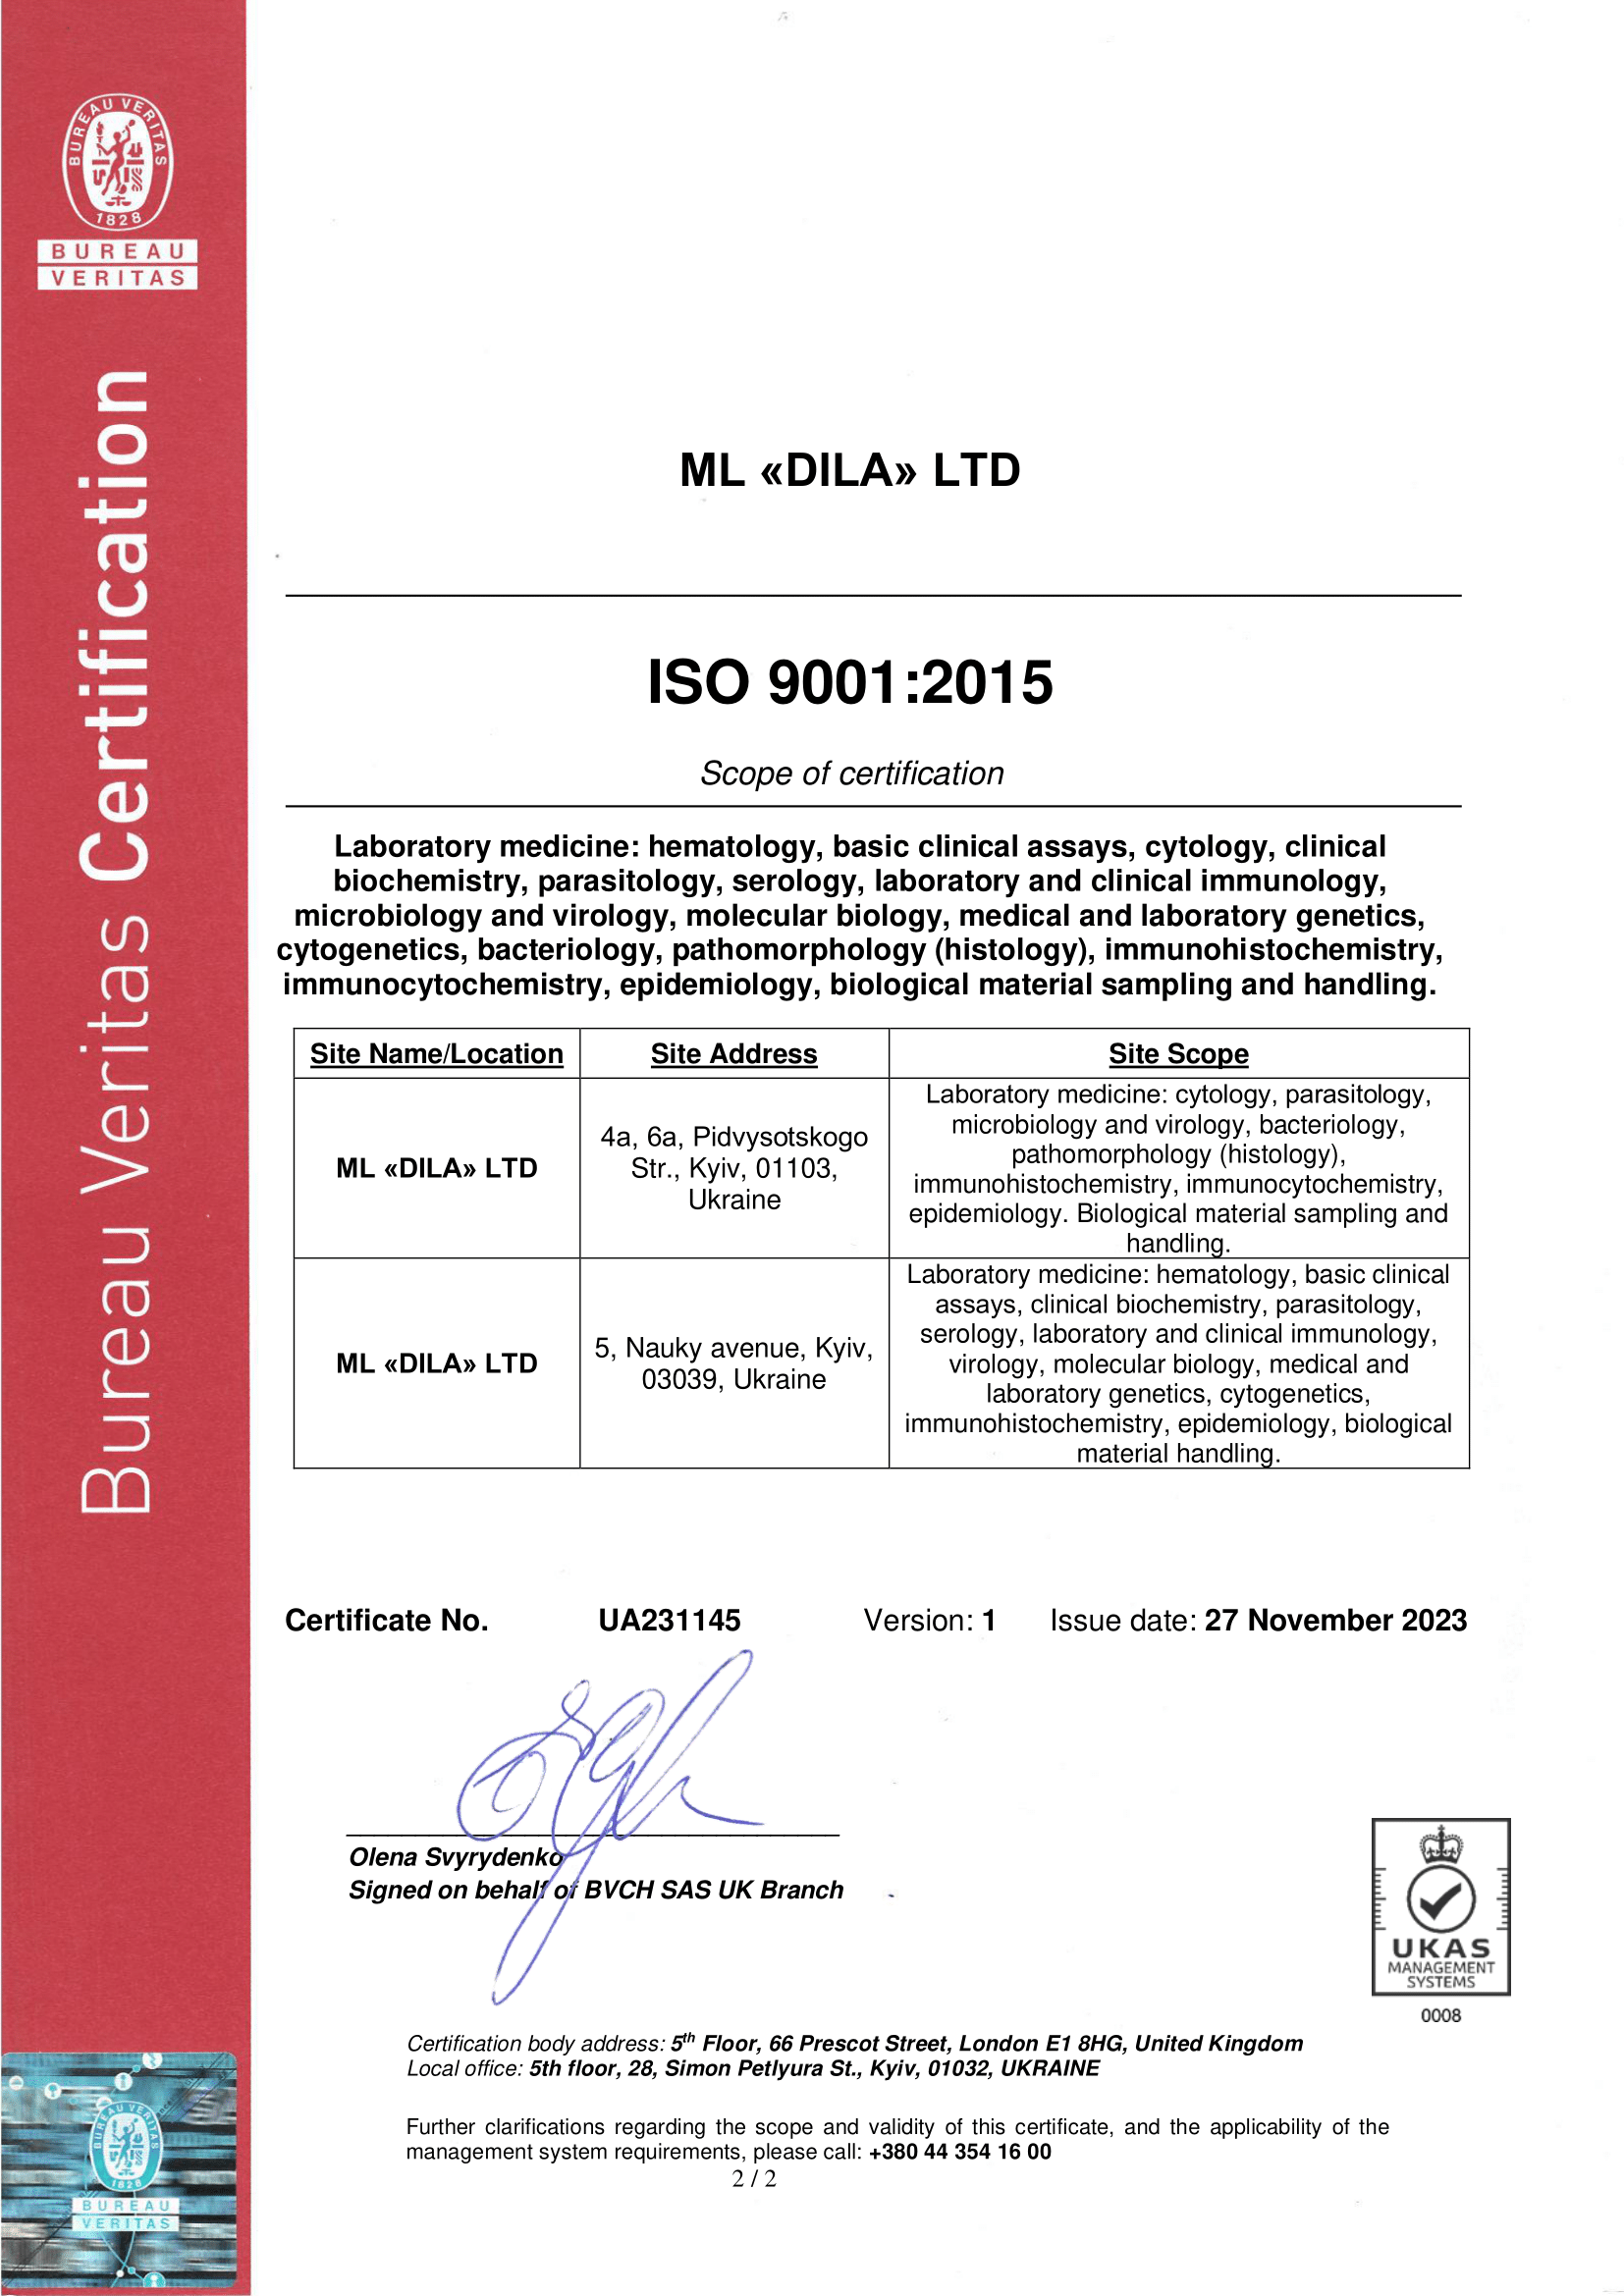 Фото - Сертификат соответствия ISO 9001:2015 (англ.)